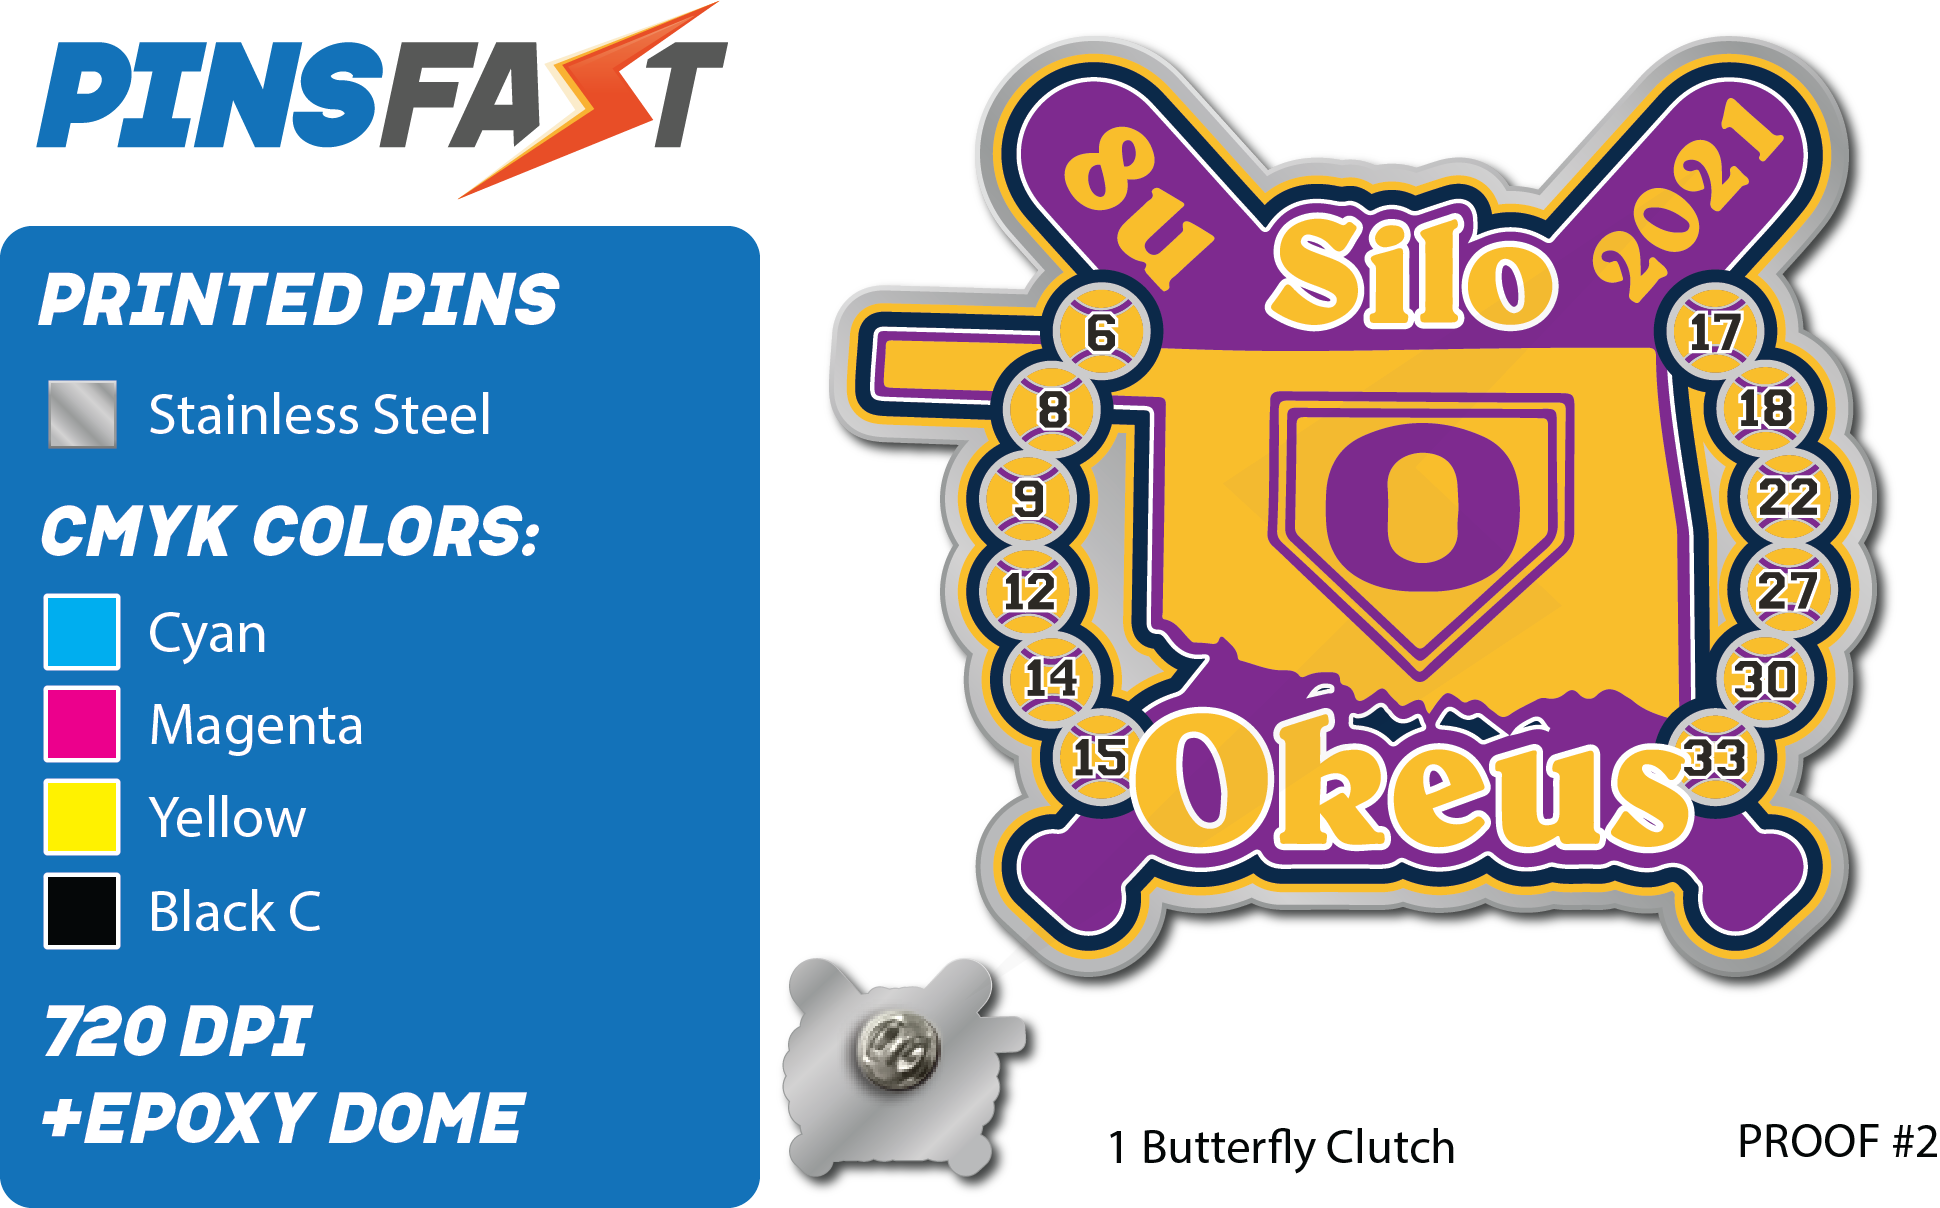 Silo Okeus softball trading pins